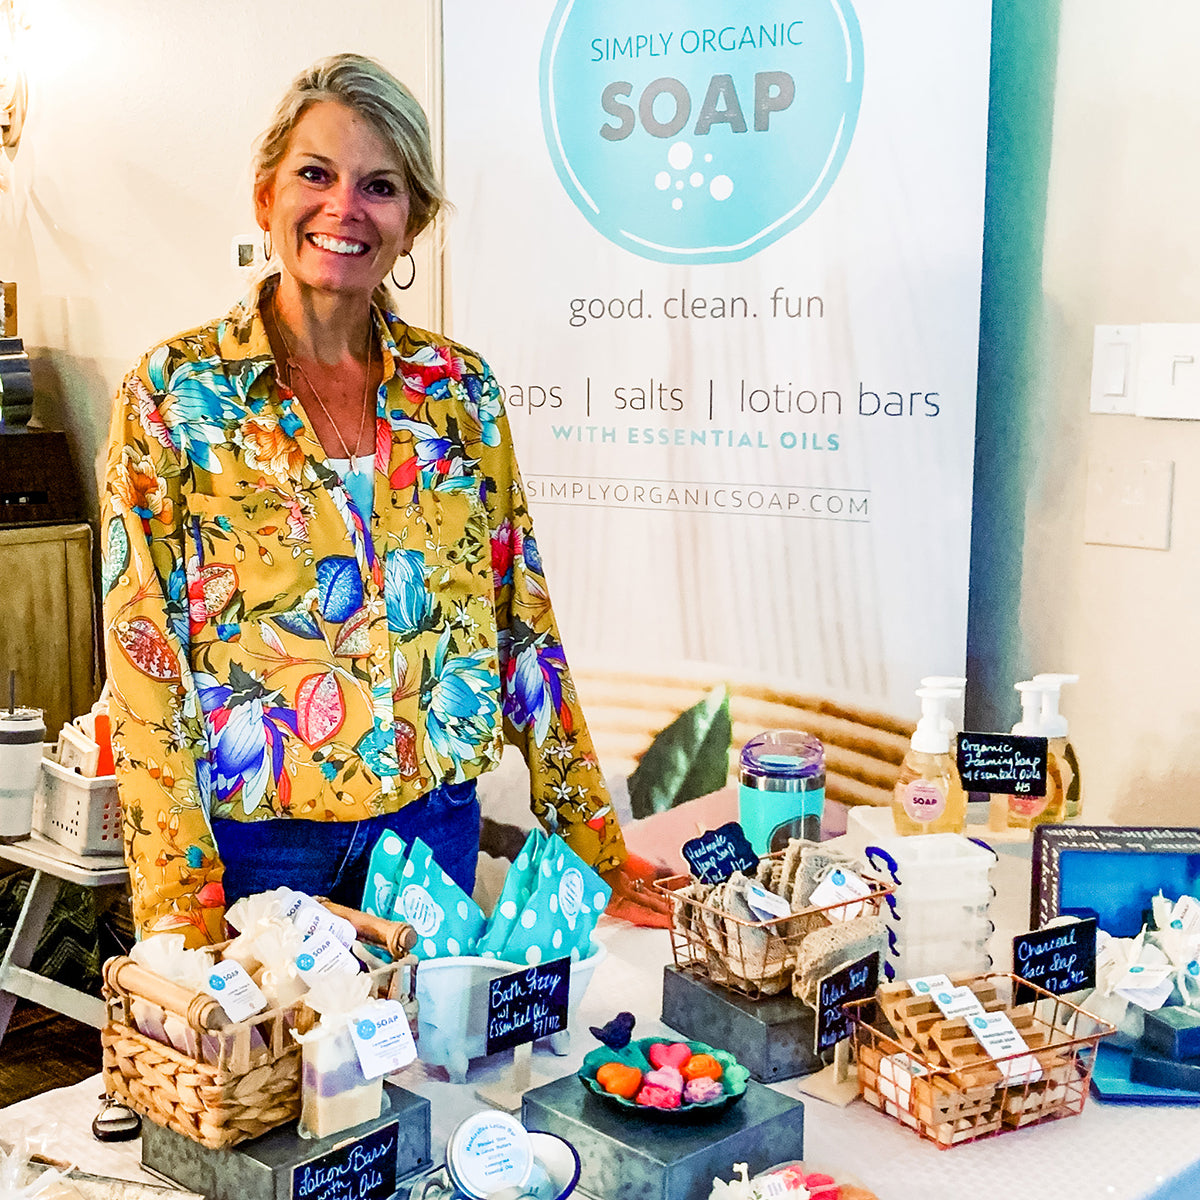 Meet the Maker: Simply Organic Soap